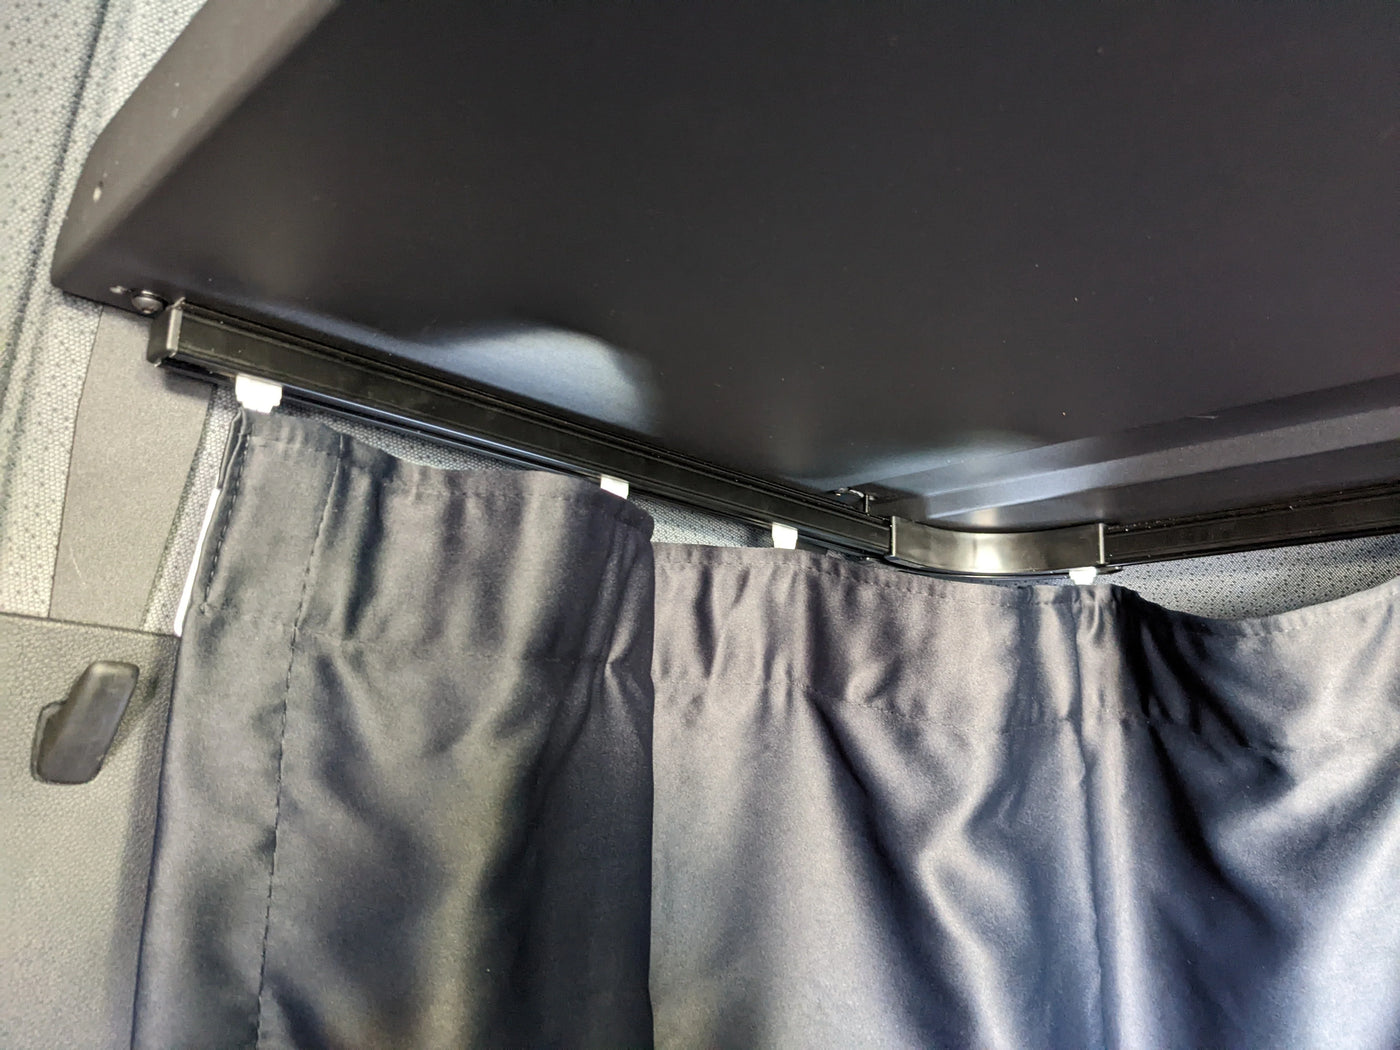 White Top Adventures Sprinter Van 180 Total Blackout Curtain System